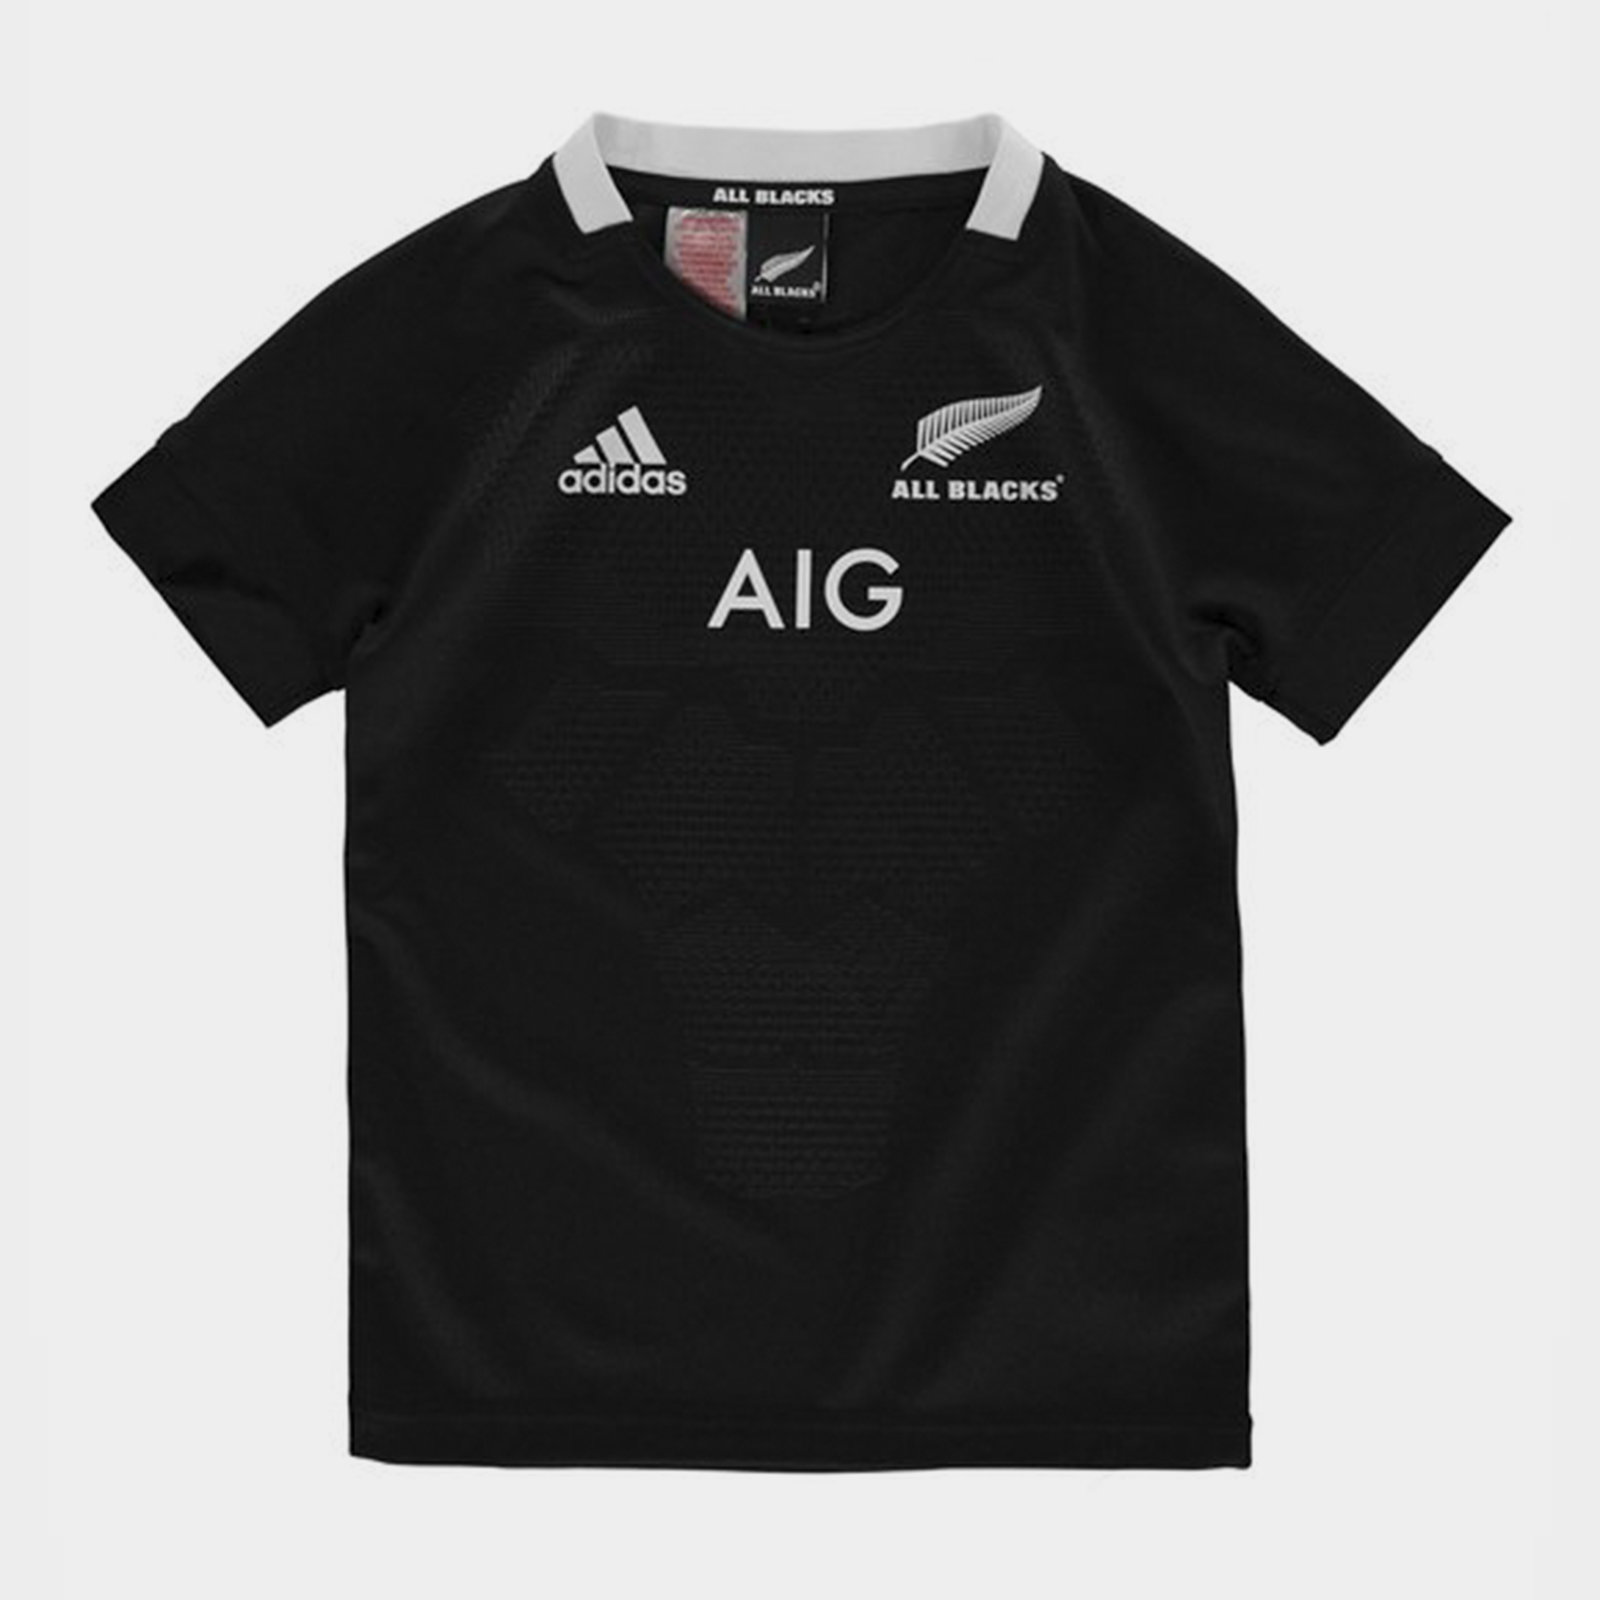 adidas all black rugby shirt